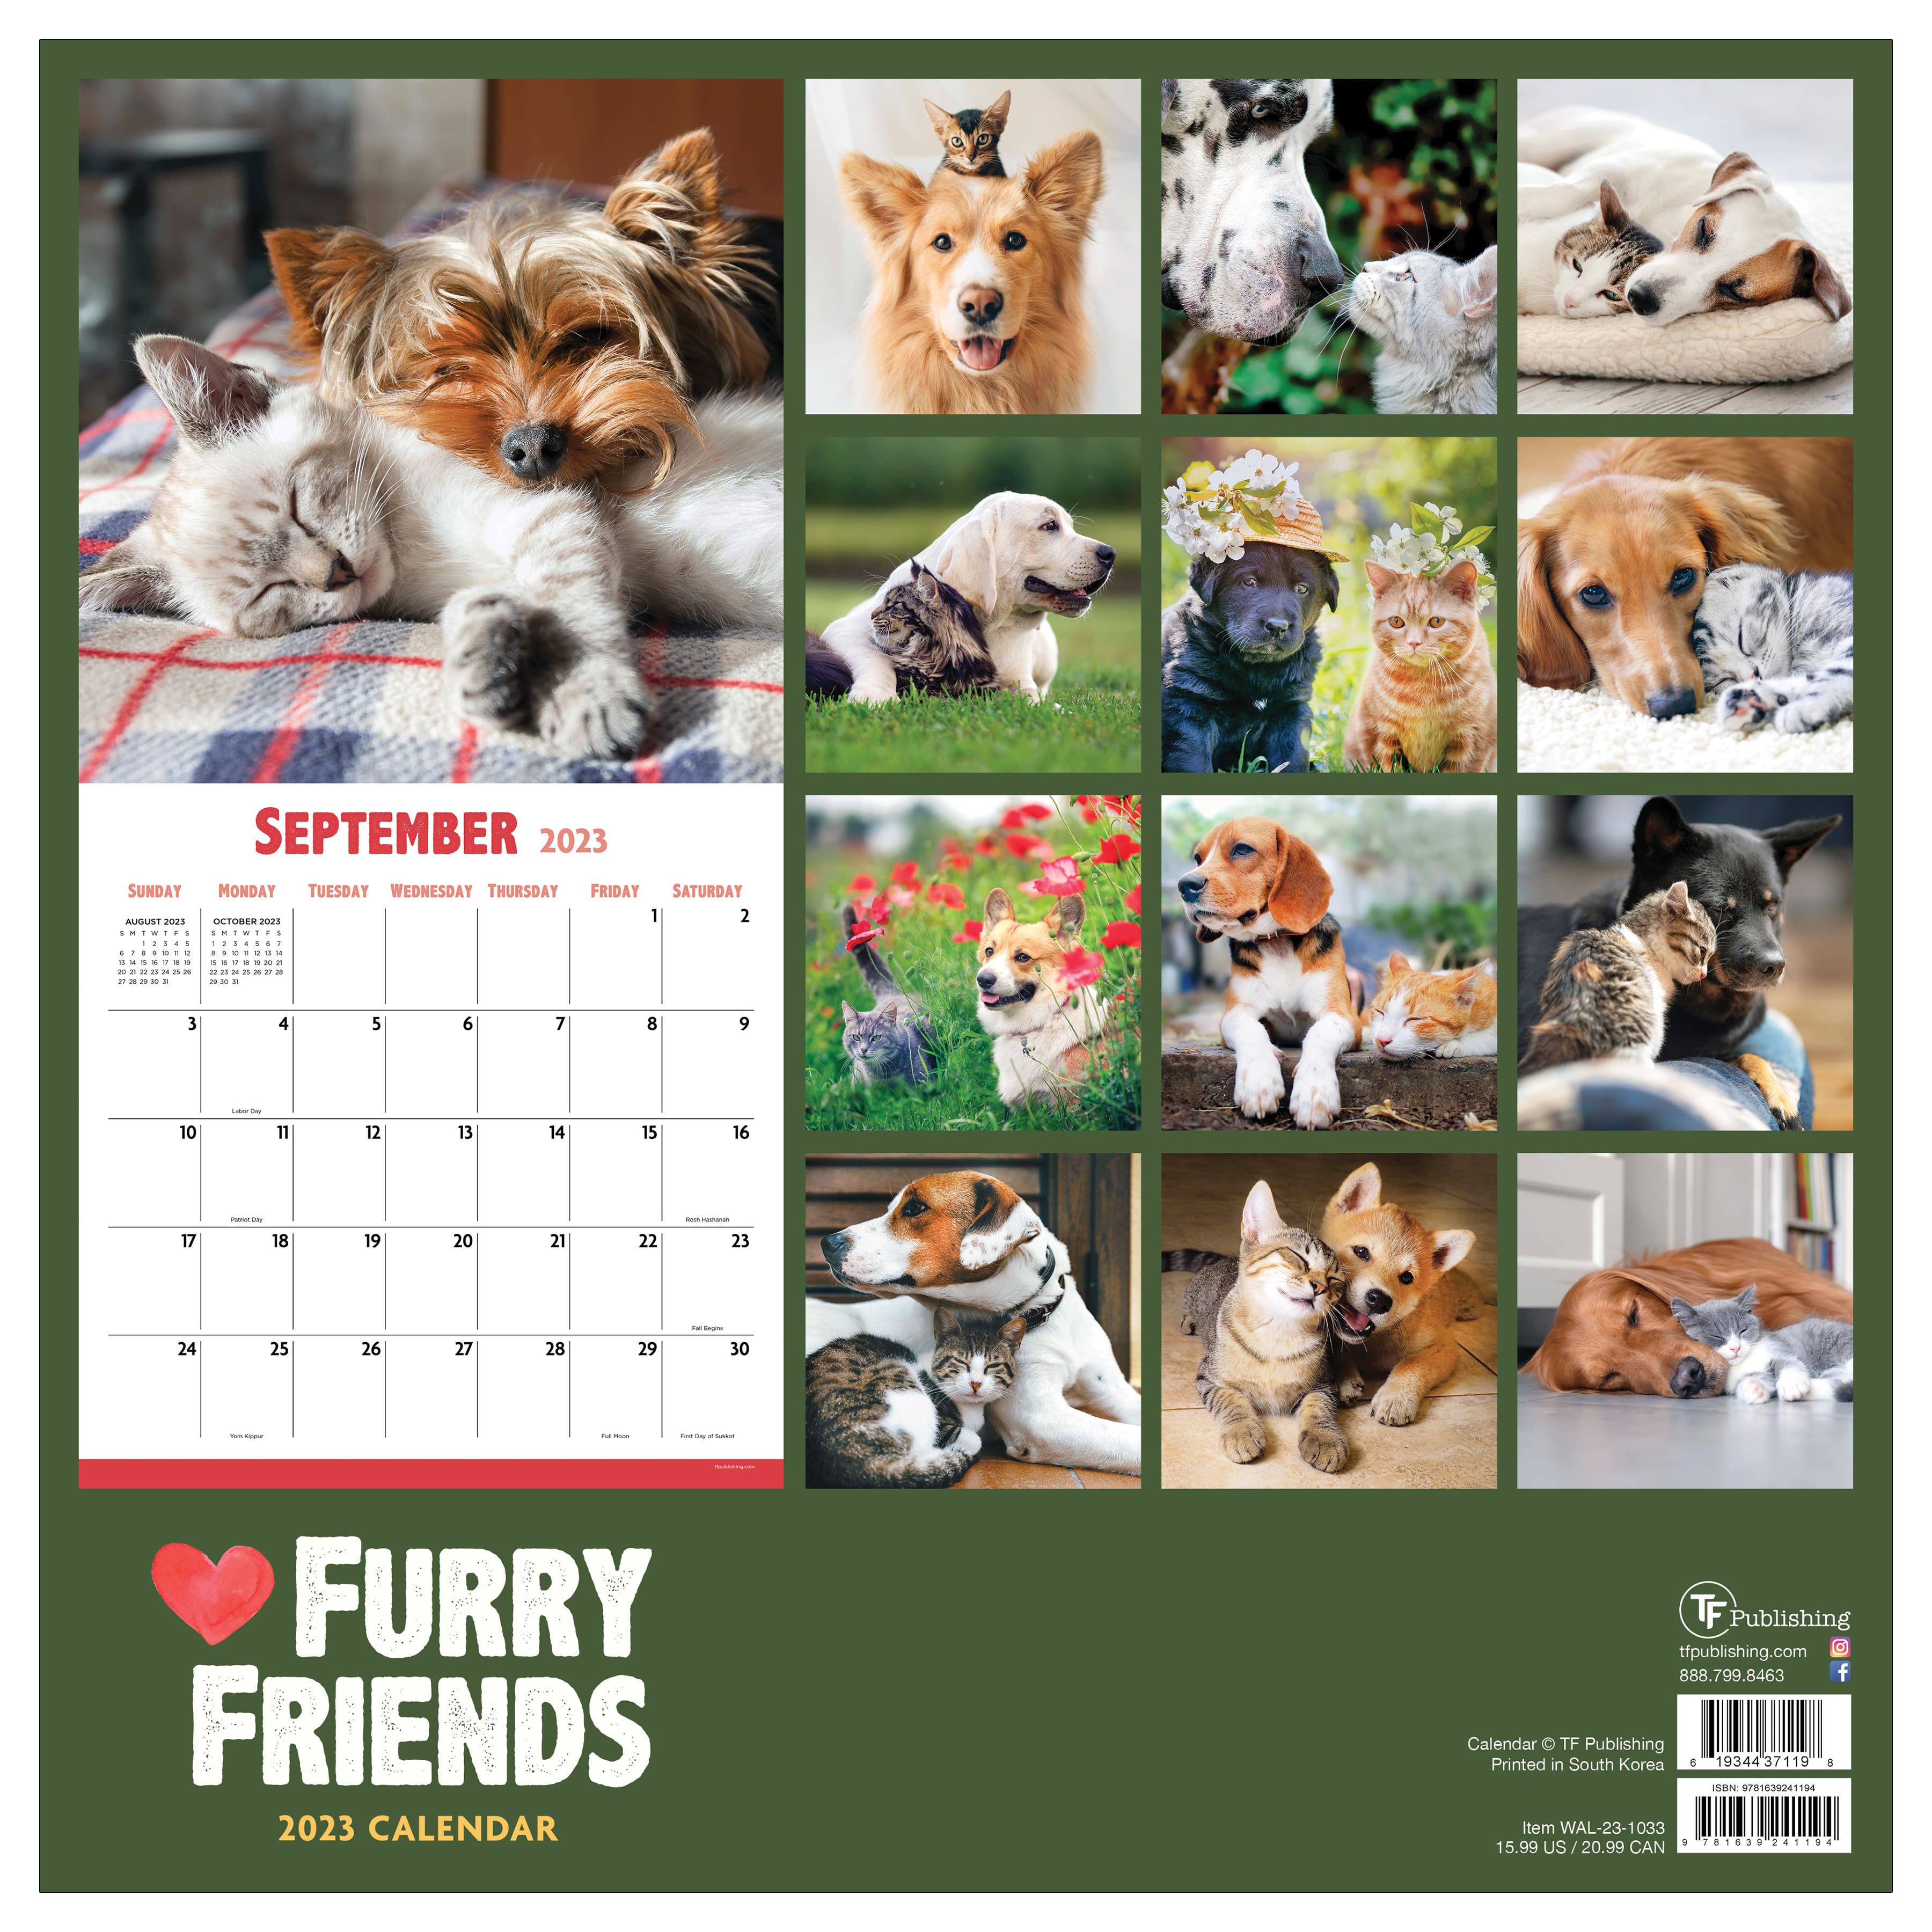 TF Publishing 2023 Furry Friends Wall Calendar | Michaels